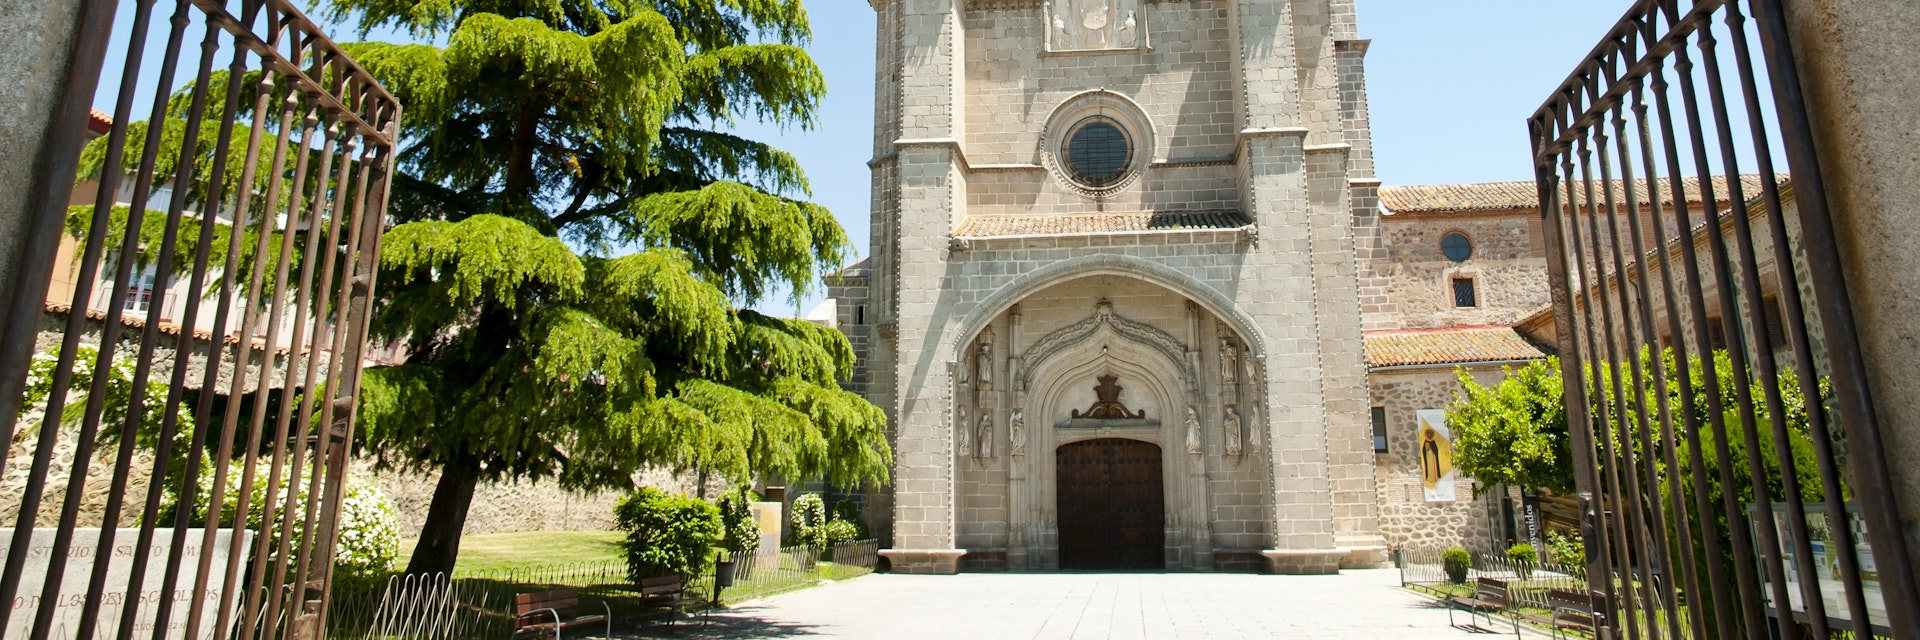 St Thomas Royal Monastery, Avila, Spain.